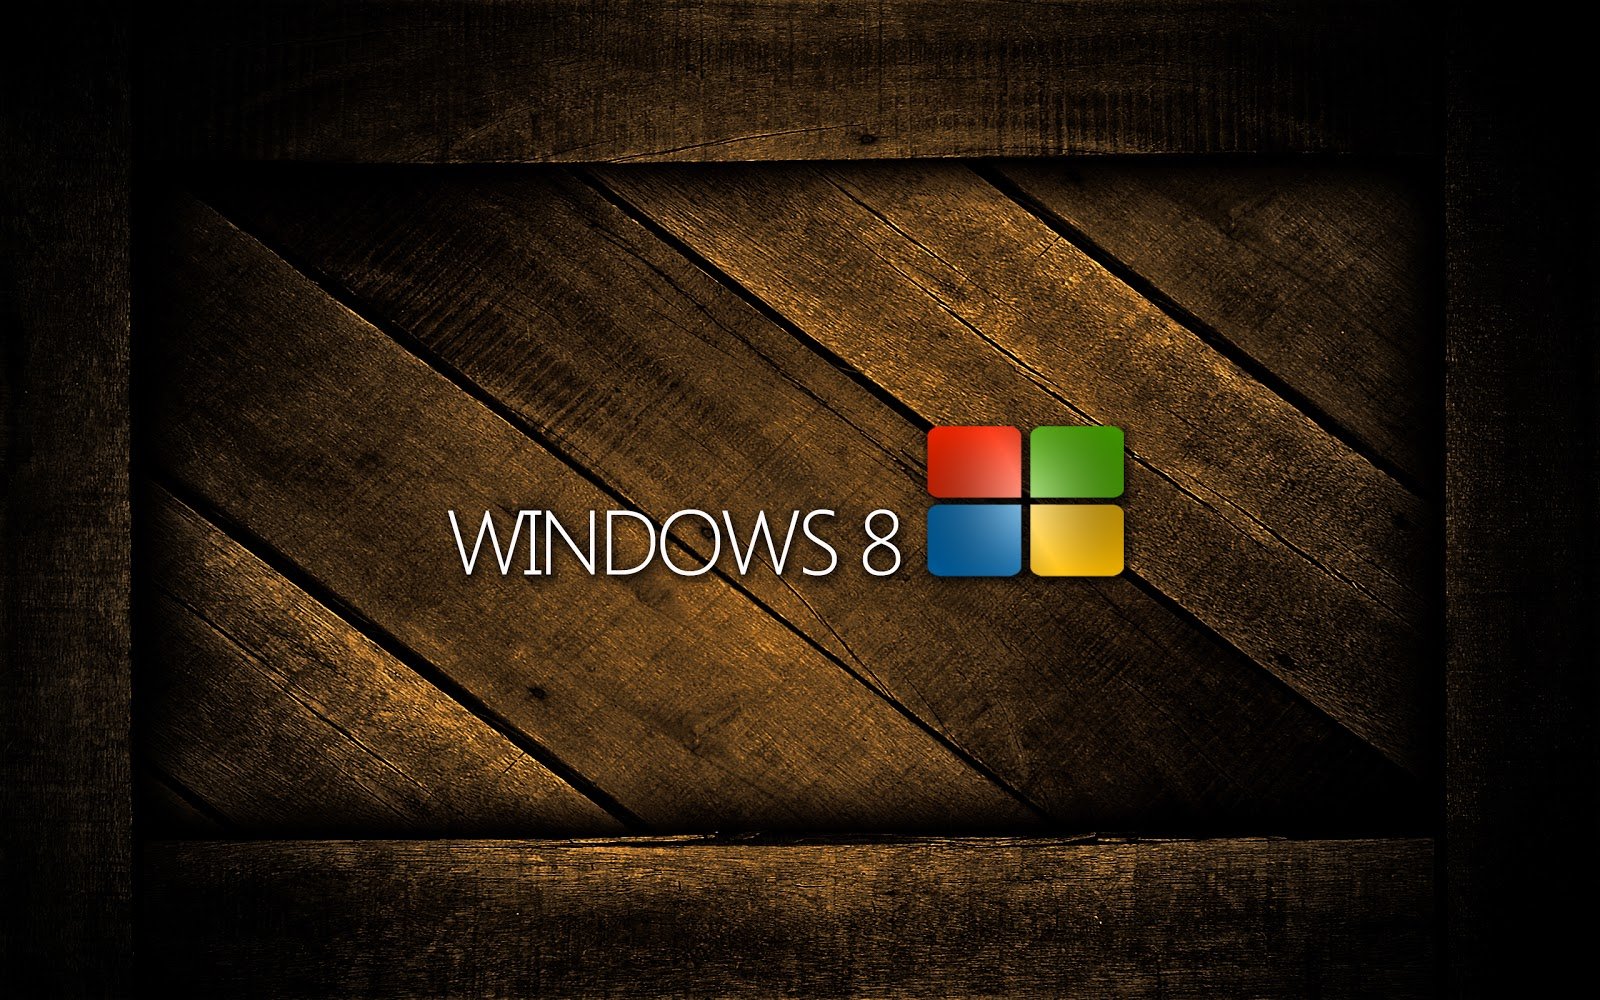  wallpaper downloads windows 8 hd wallpapers download 1600x1000